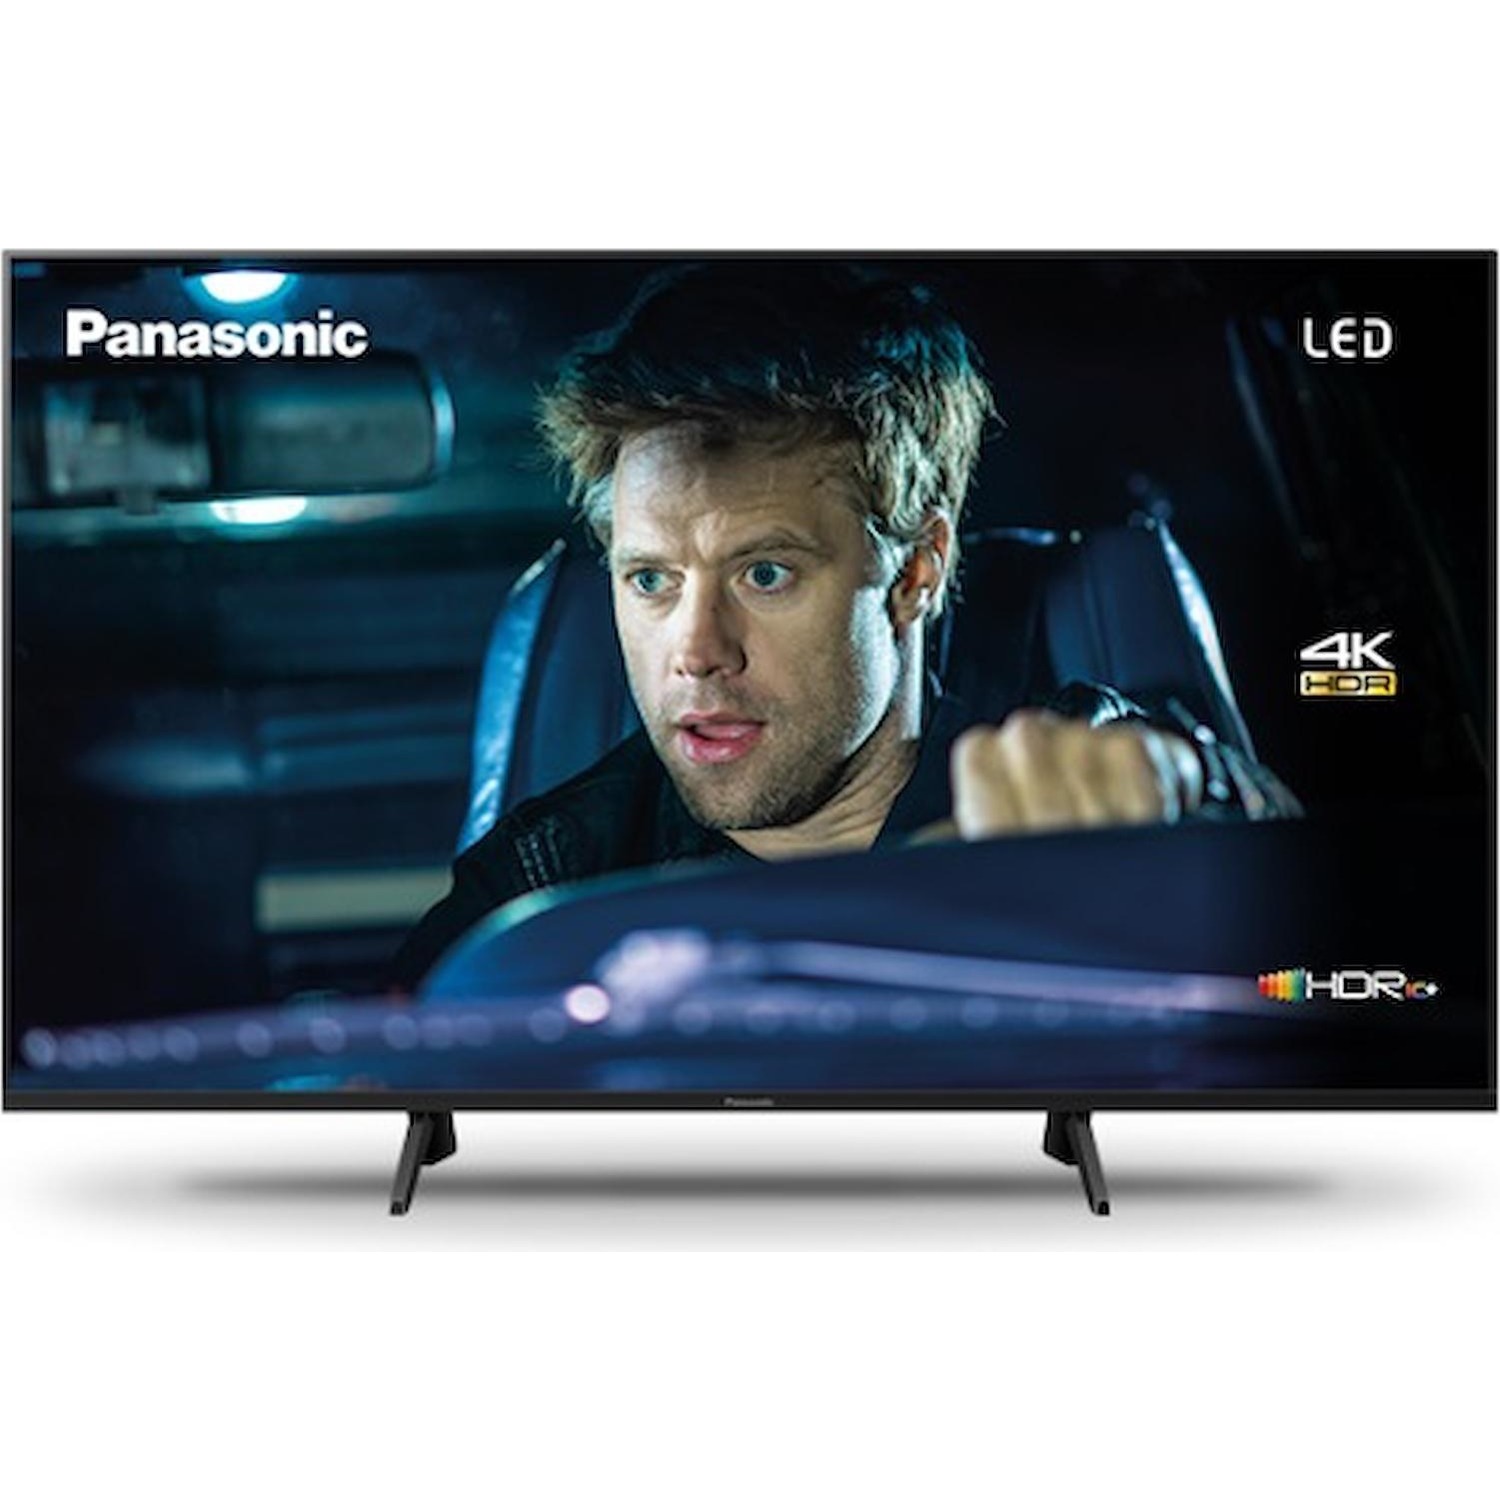 Immagine per TV LED Smart 4K UHD Panasonic 40GX700 da DIMOStore